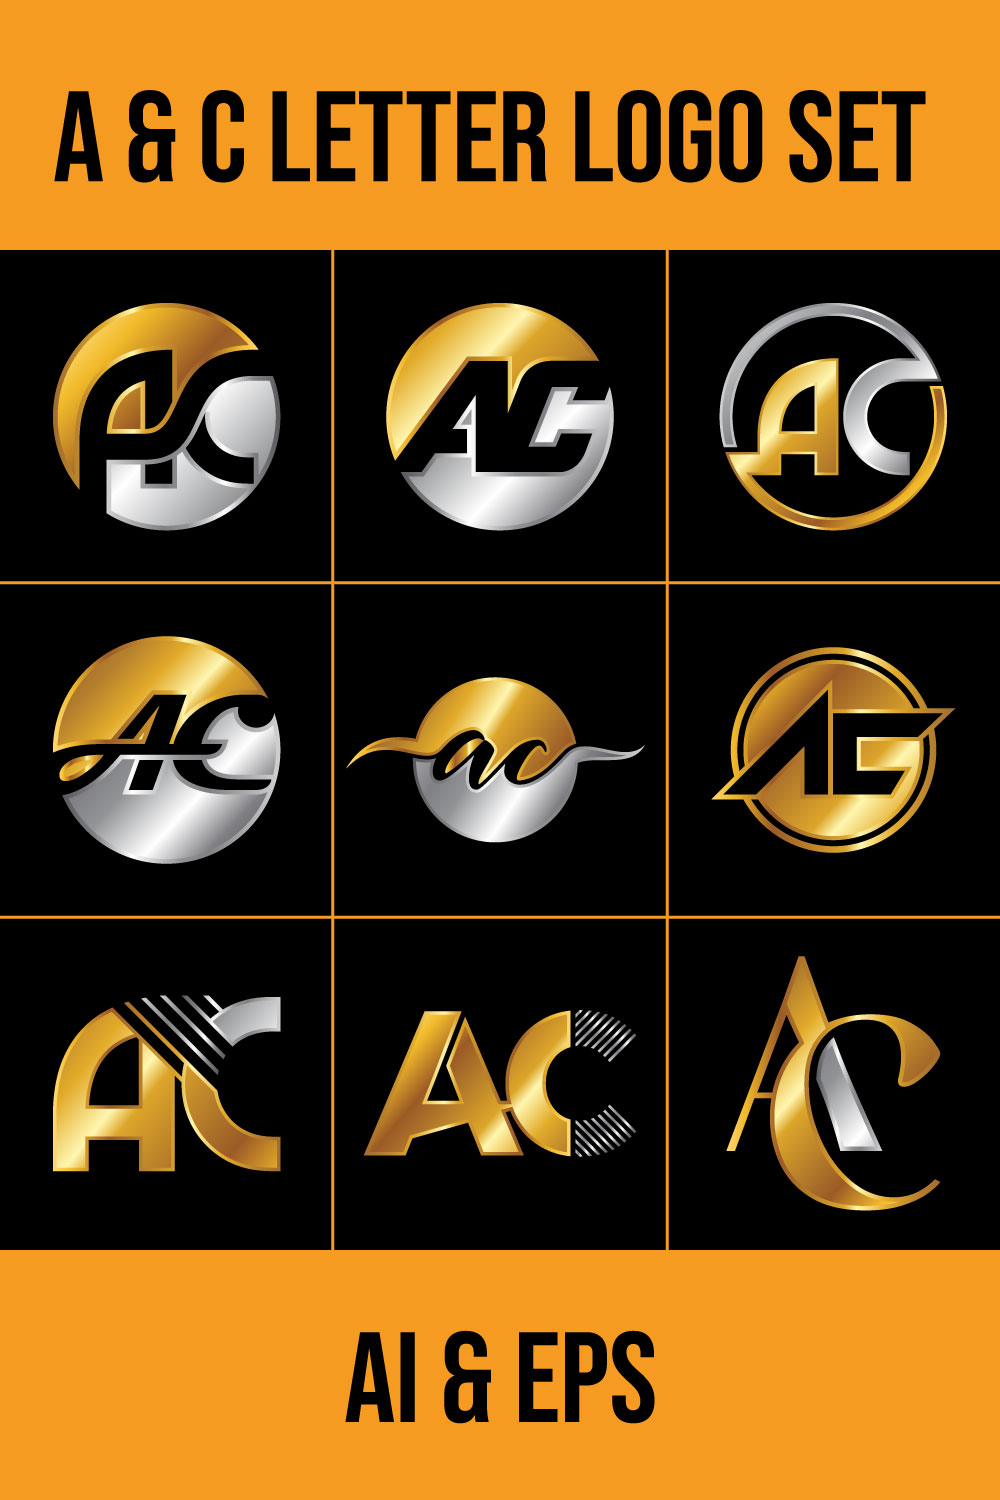 A C Initial Letter Logo Golden Design pinterest image.